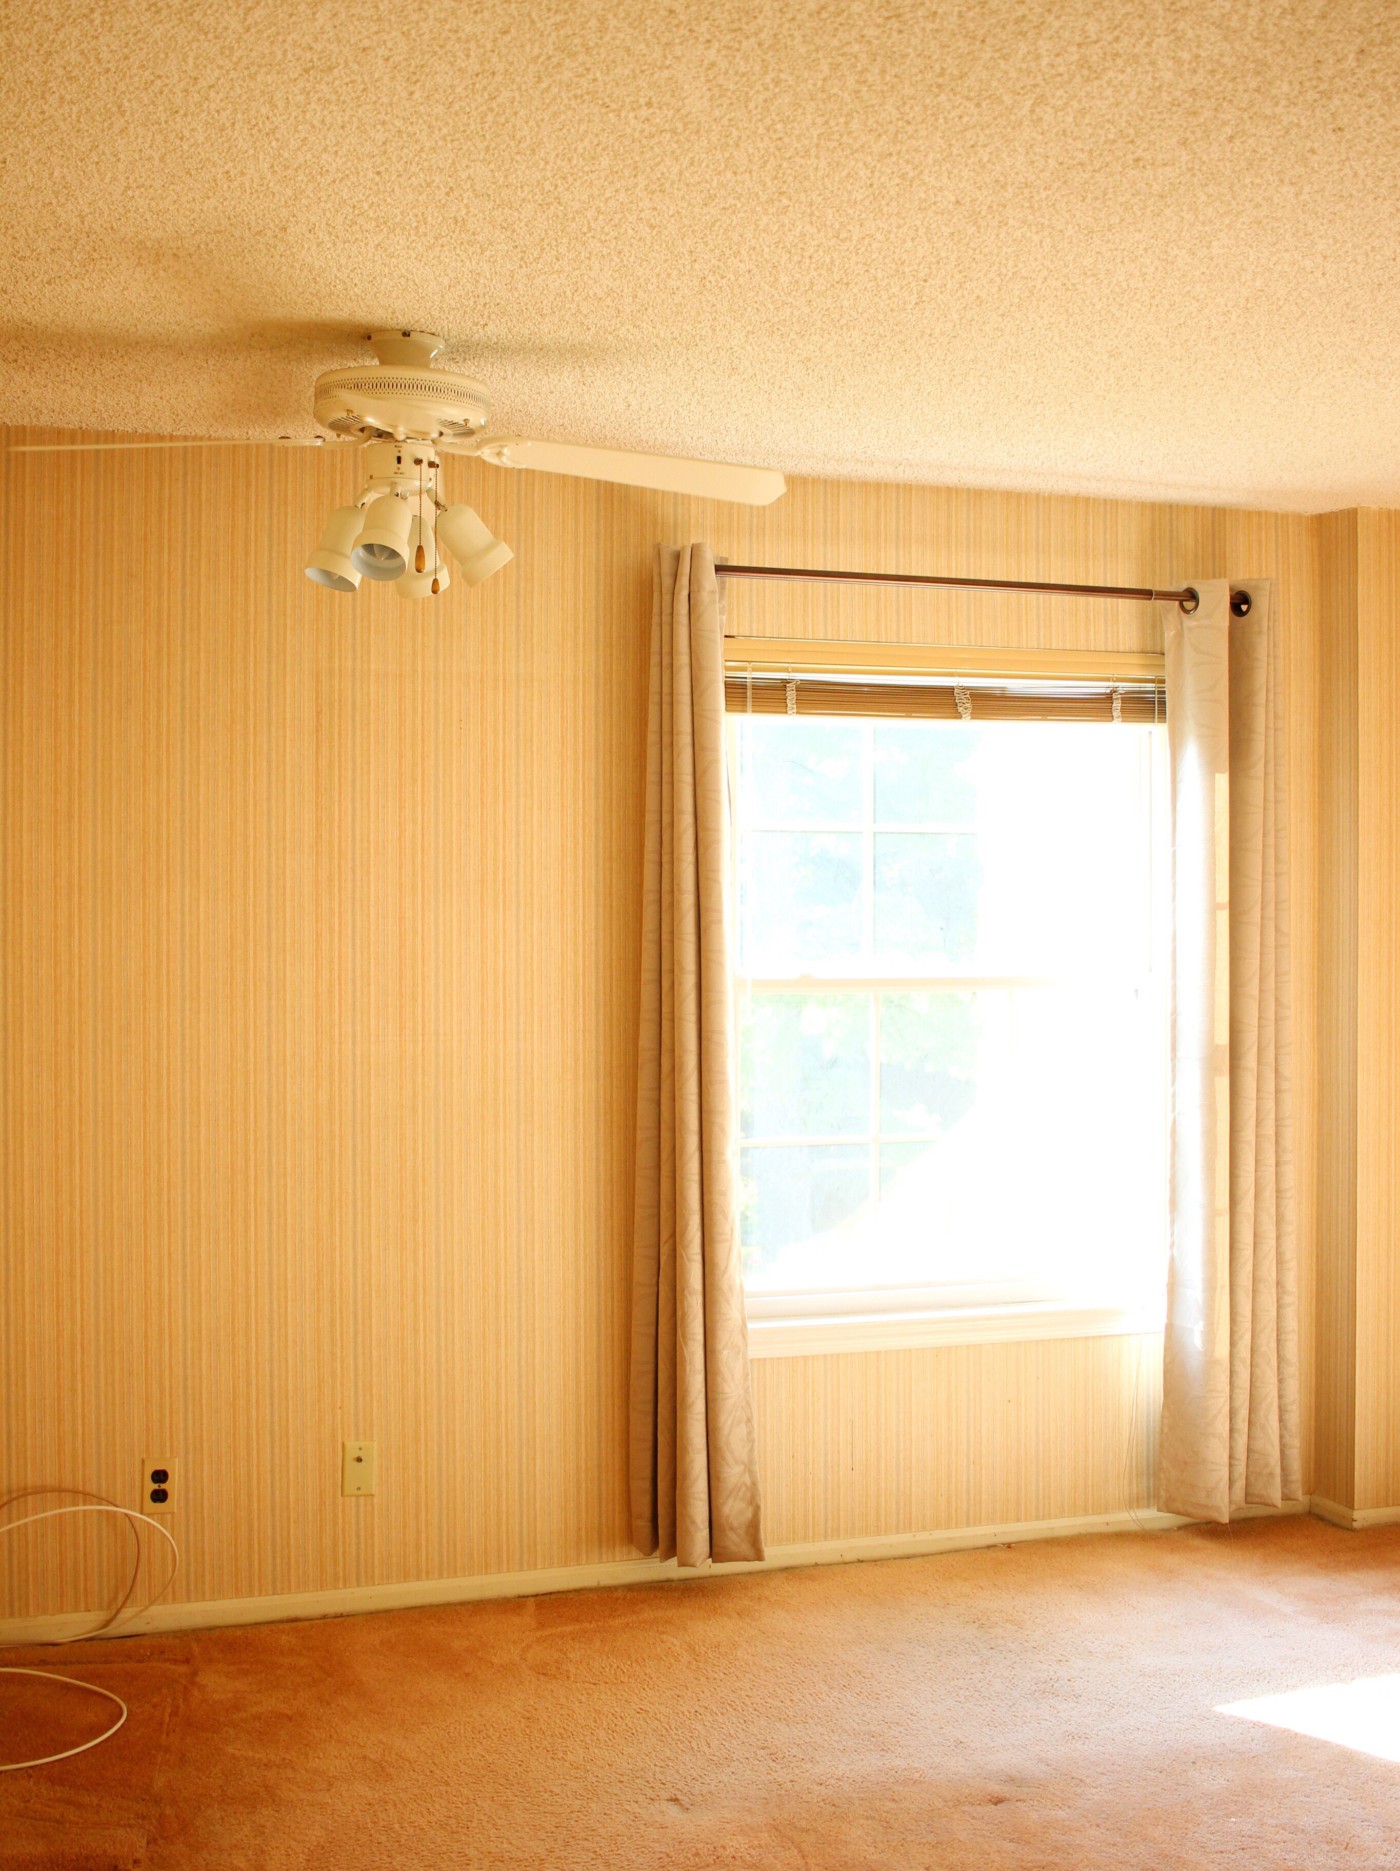 after-the-renovation-photos-master-bedroom-before-setarra